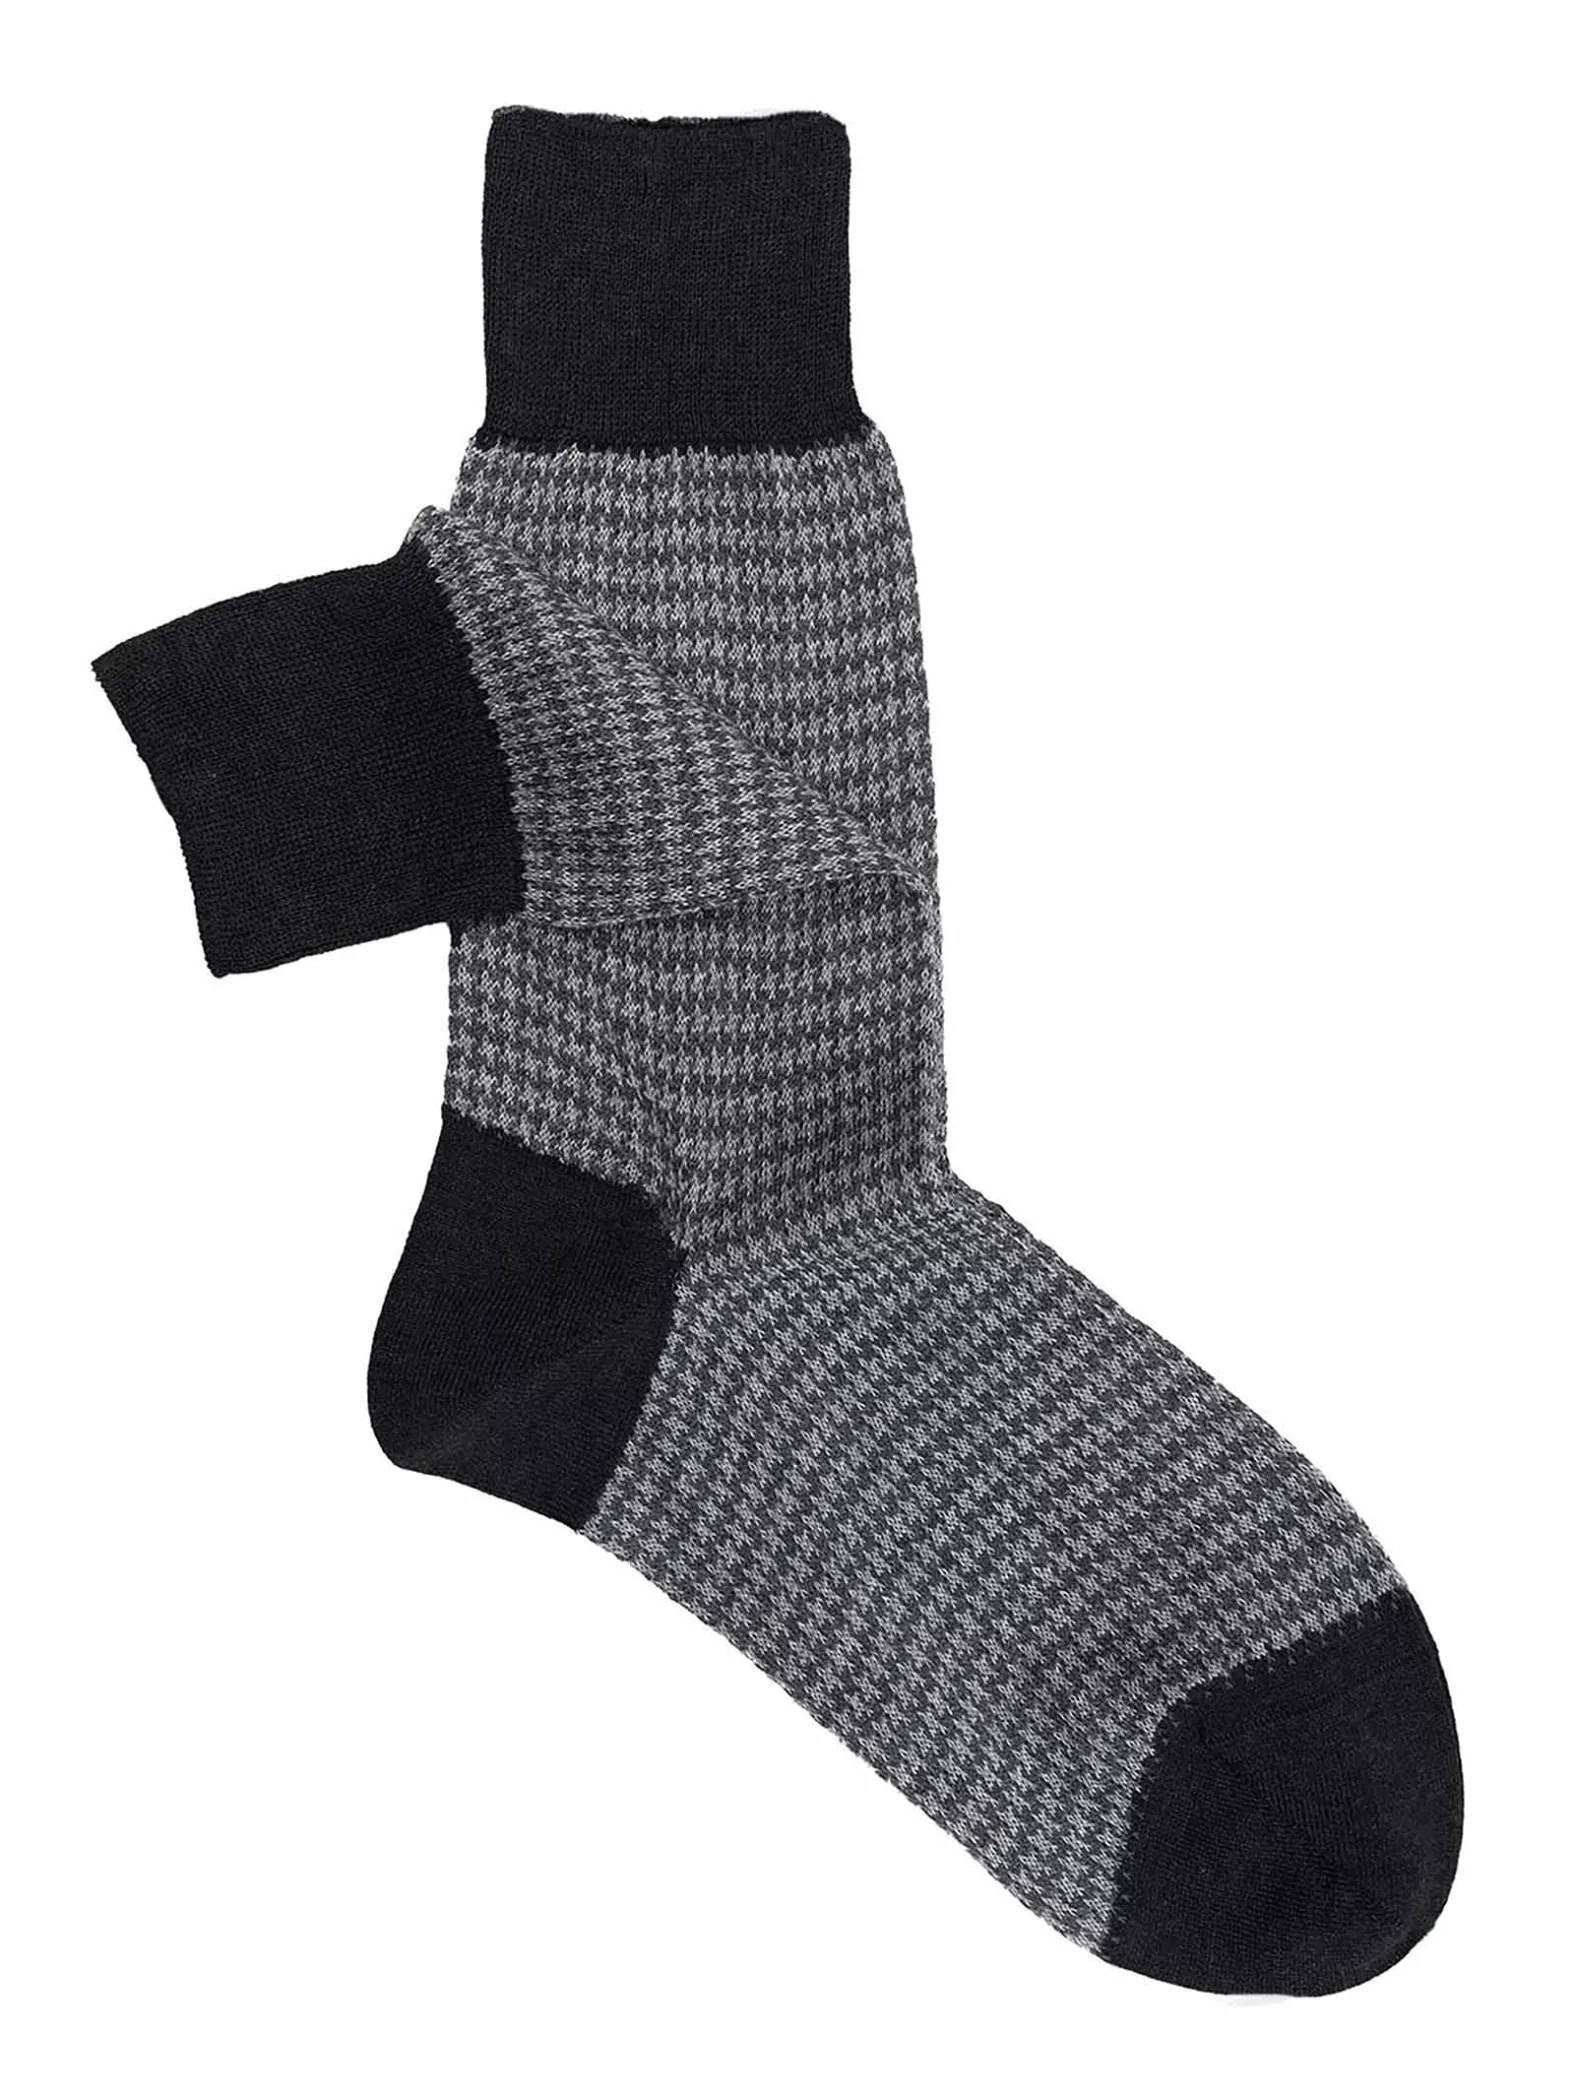 Cashmere and Silk Men's Calf Socks - Elegance Houndstooth Pattern